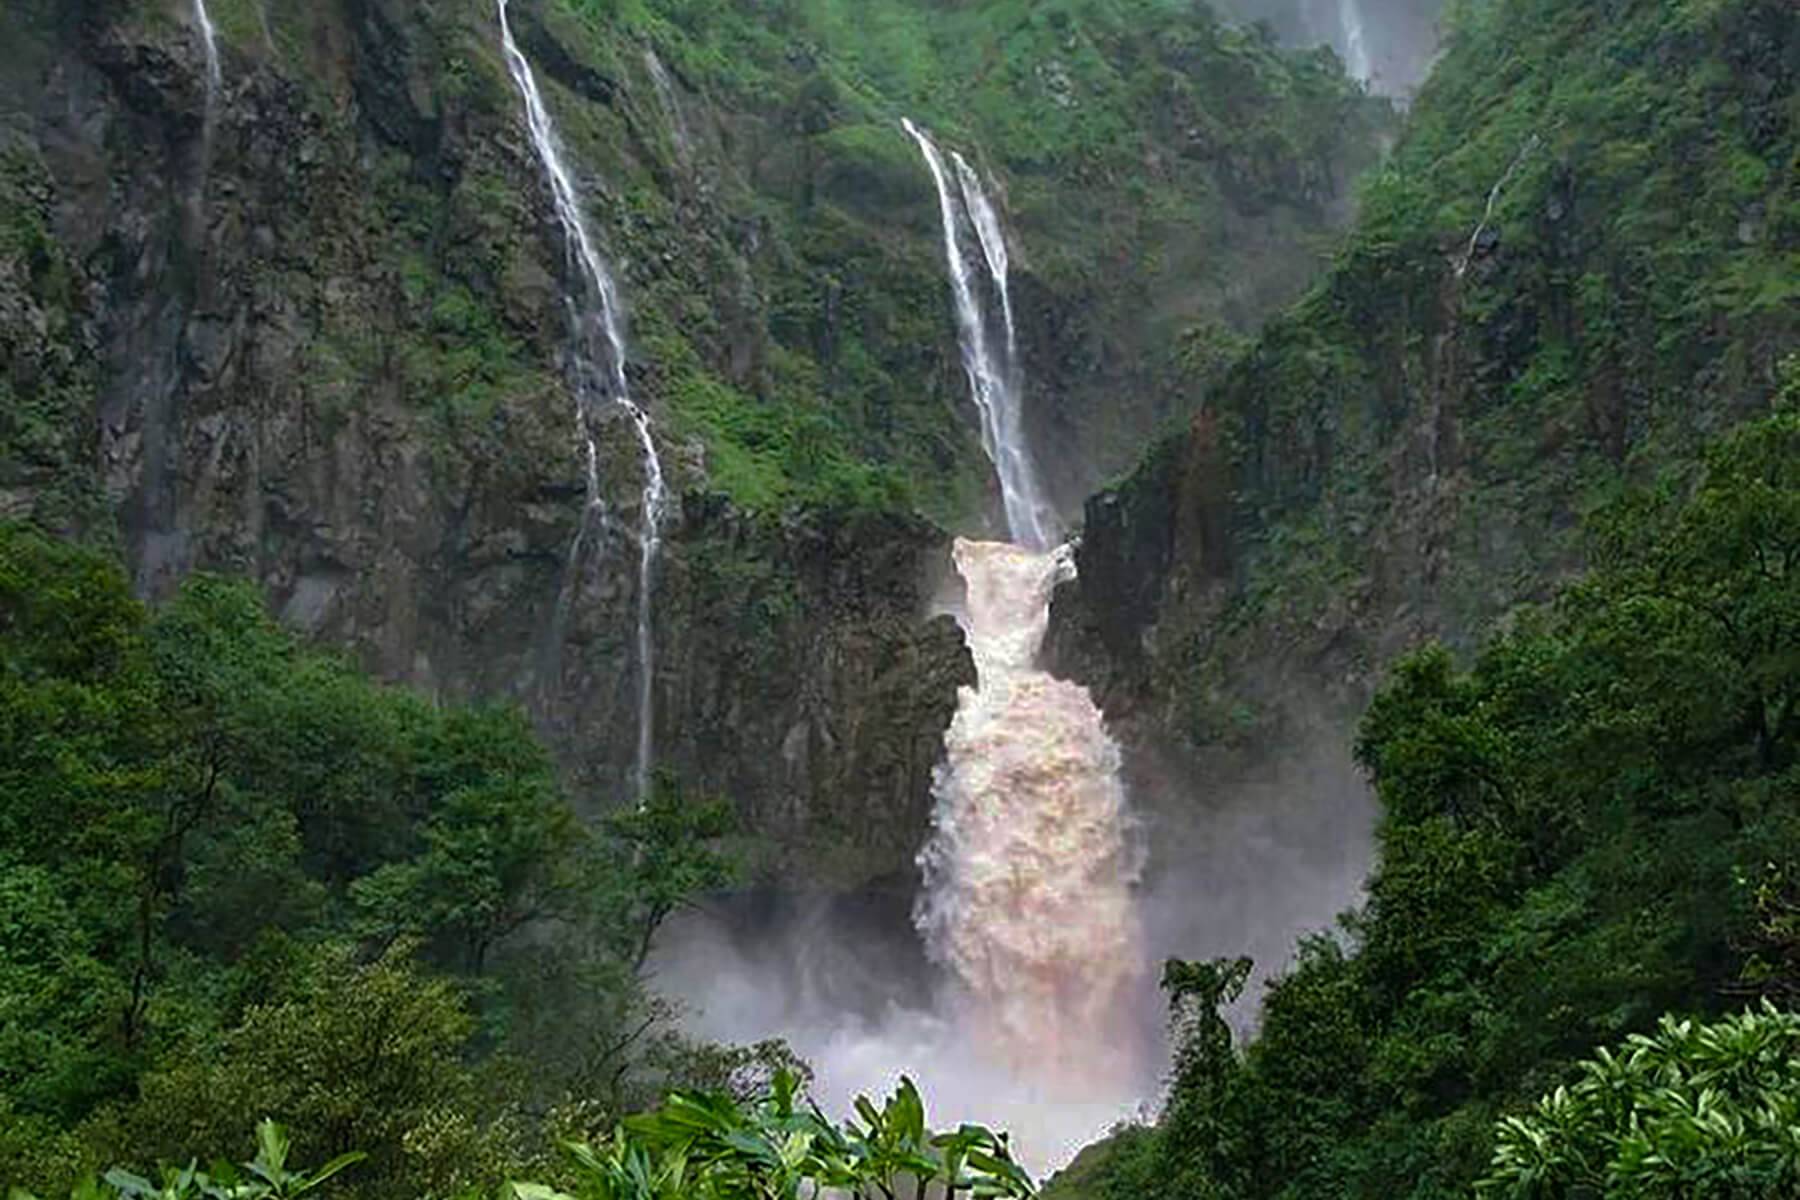 Marleshwar falls in rainy season